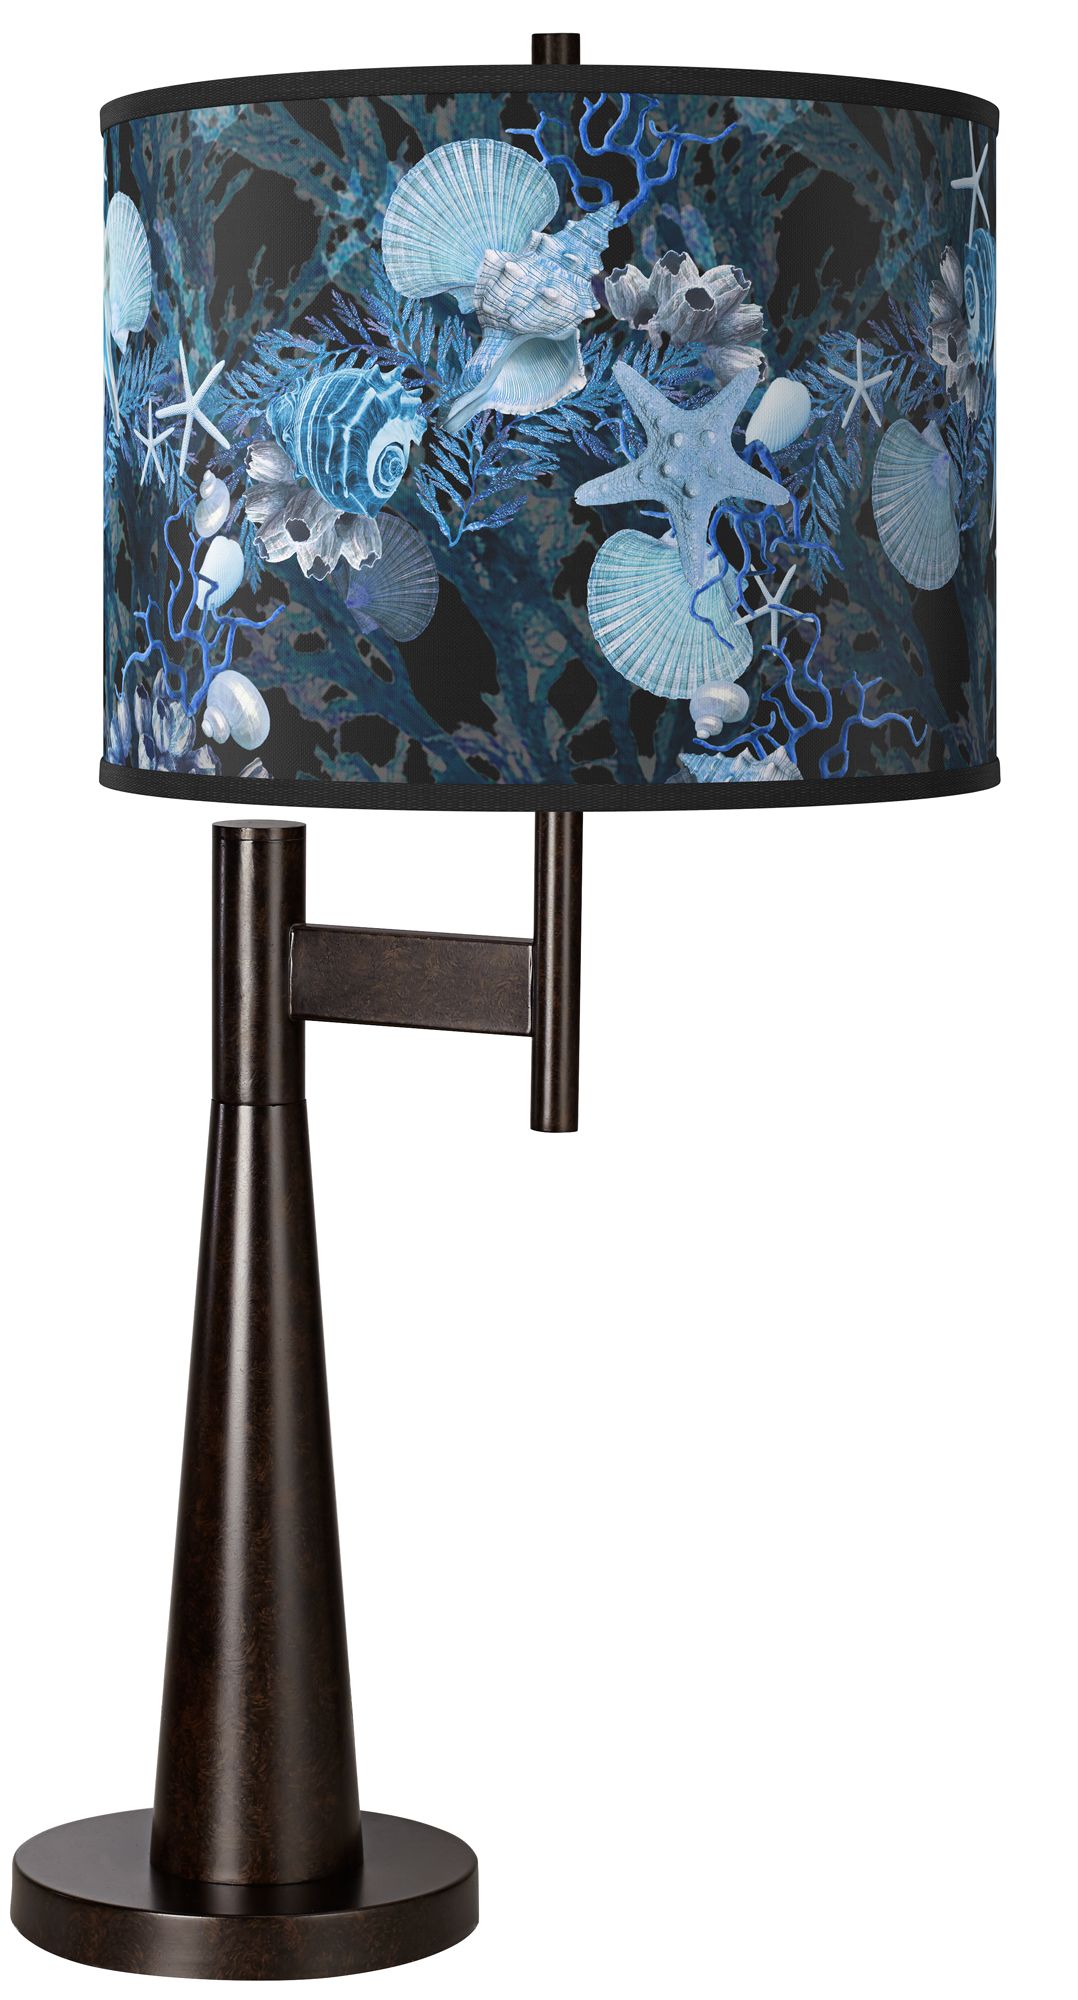 Blue Seas Giclee Novo Table Lamp